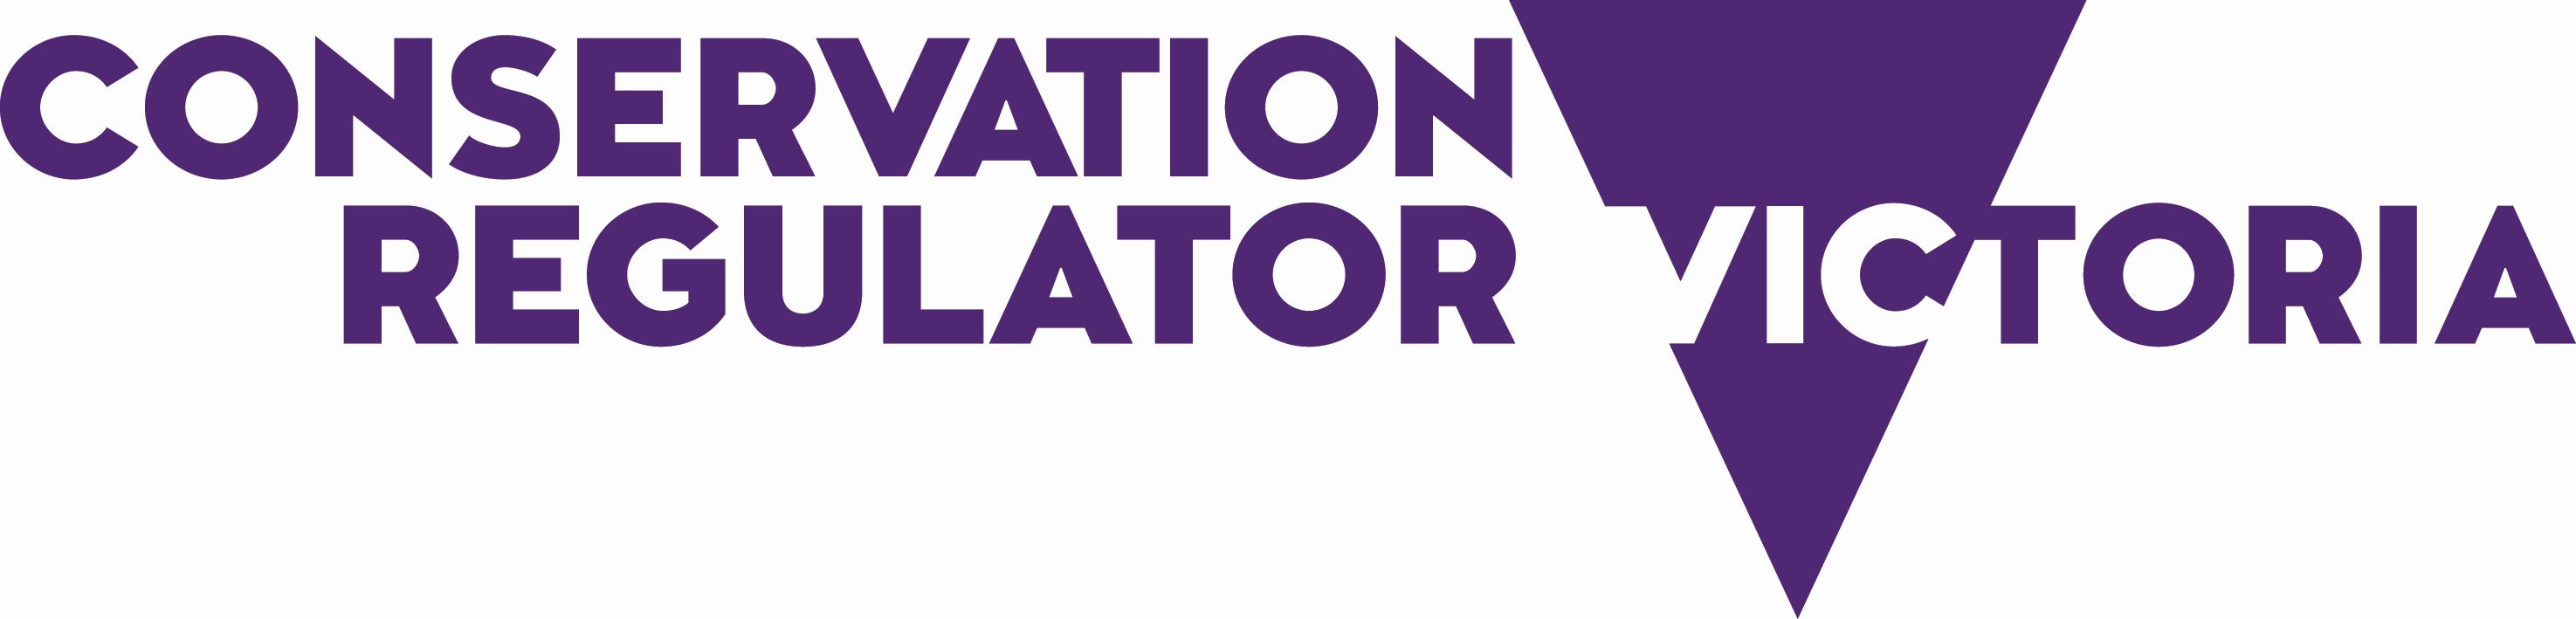 Conservation Regulator Victoria logo